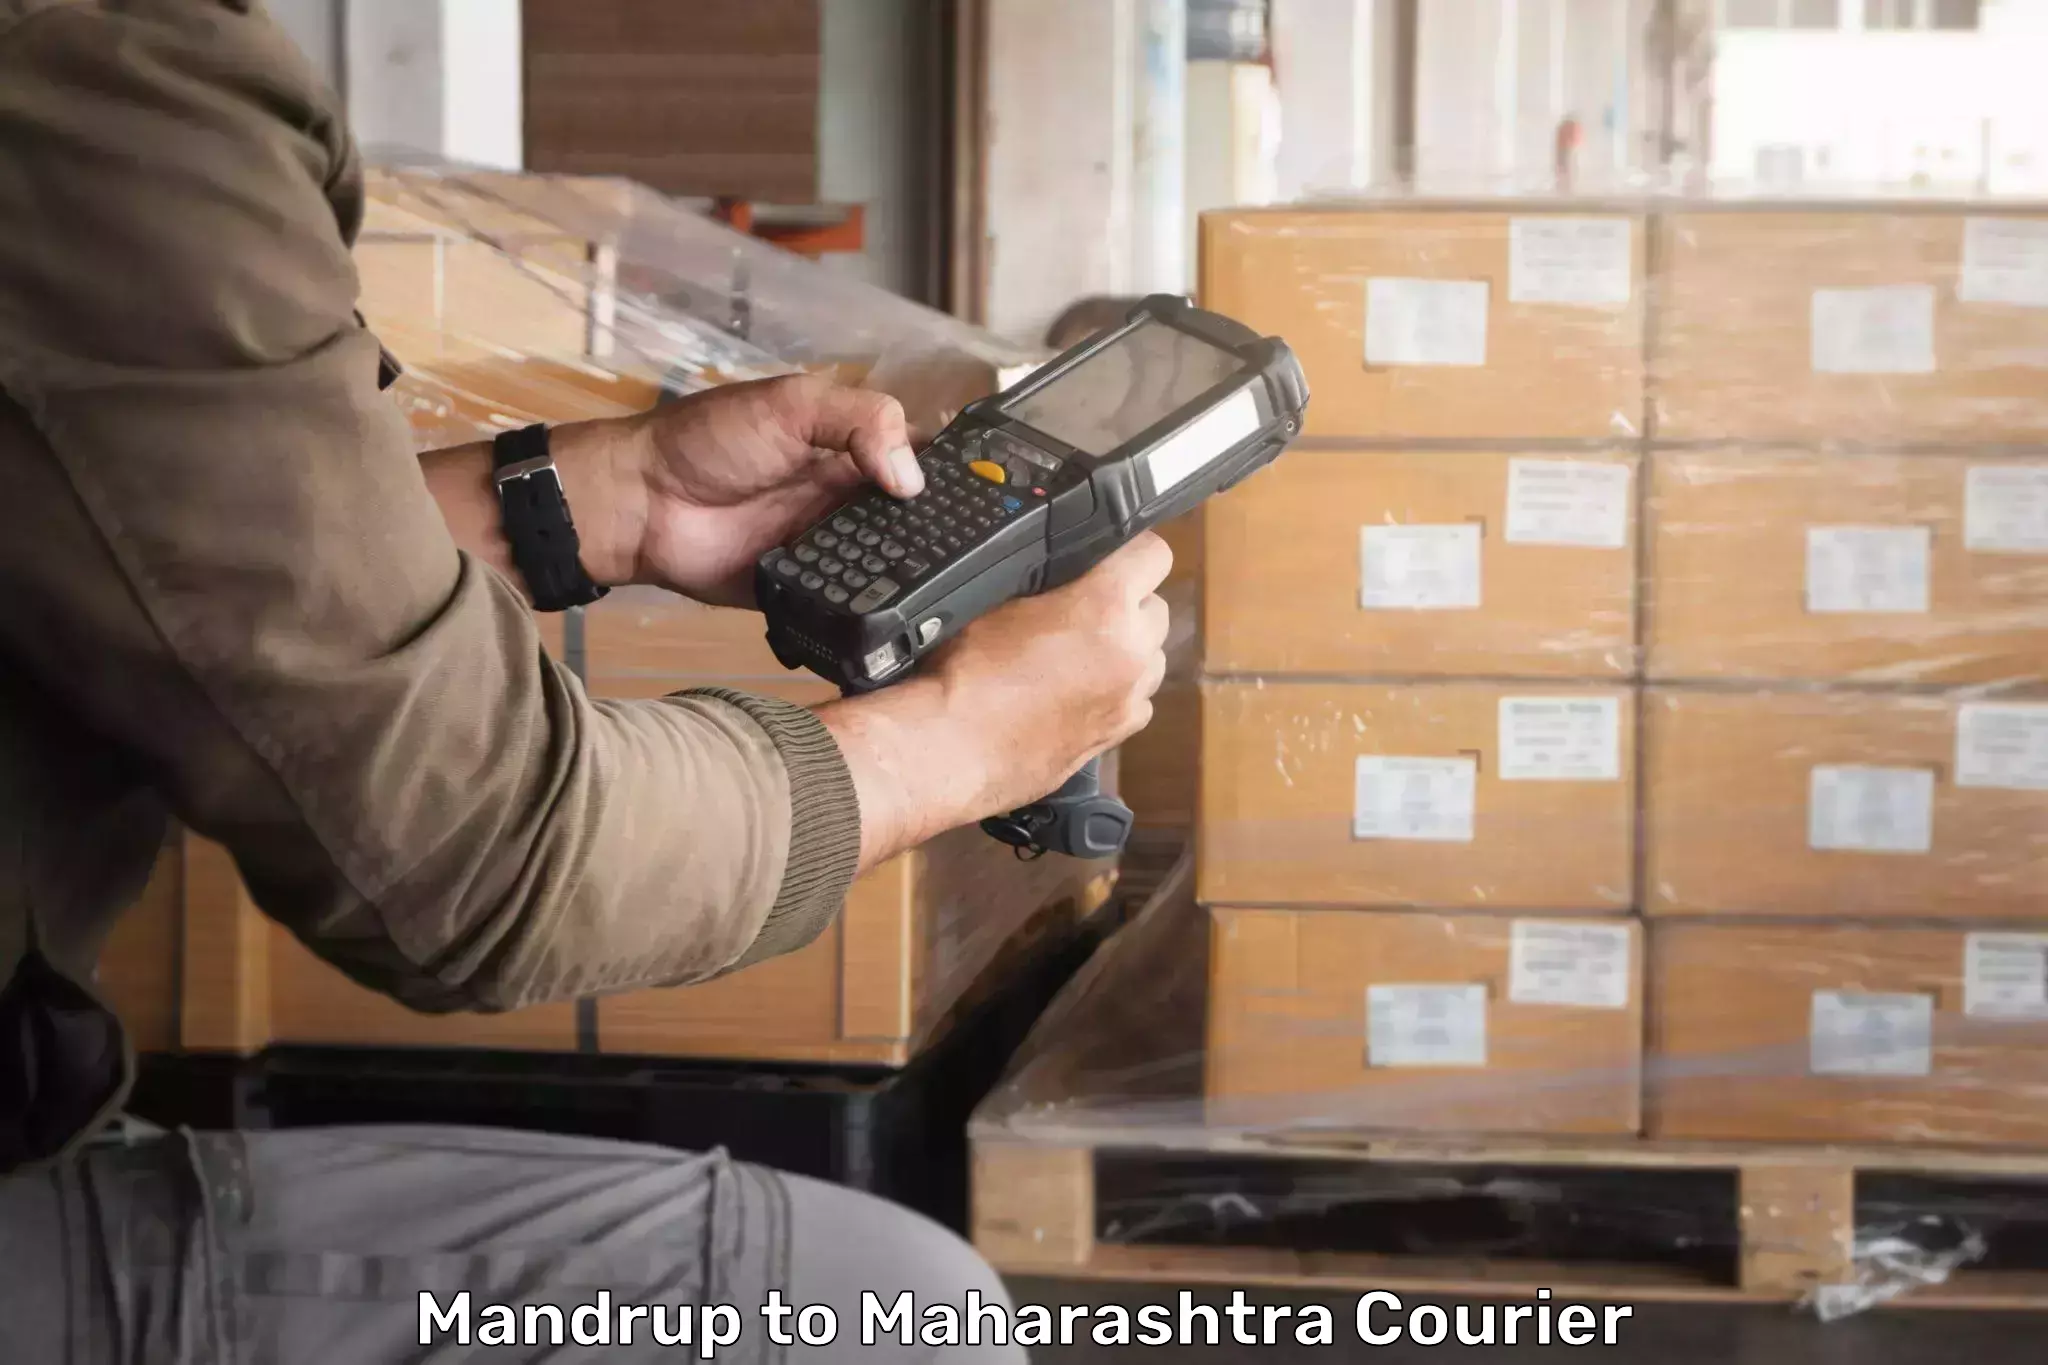 Pharmaceutical courier Mandrup to Maharashtra